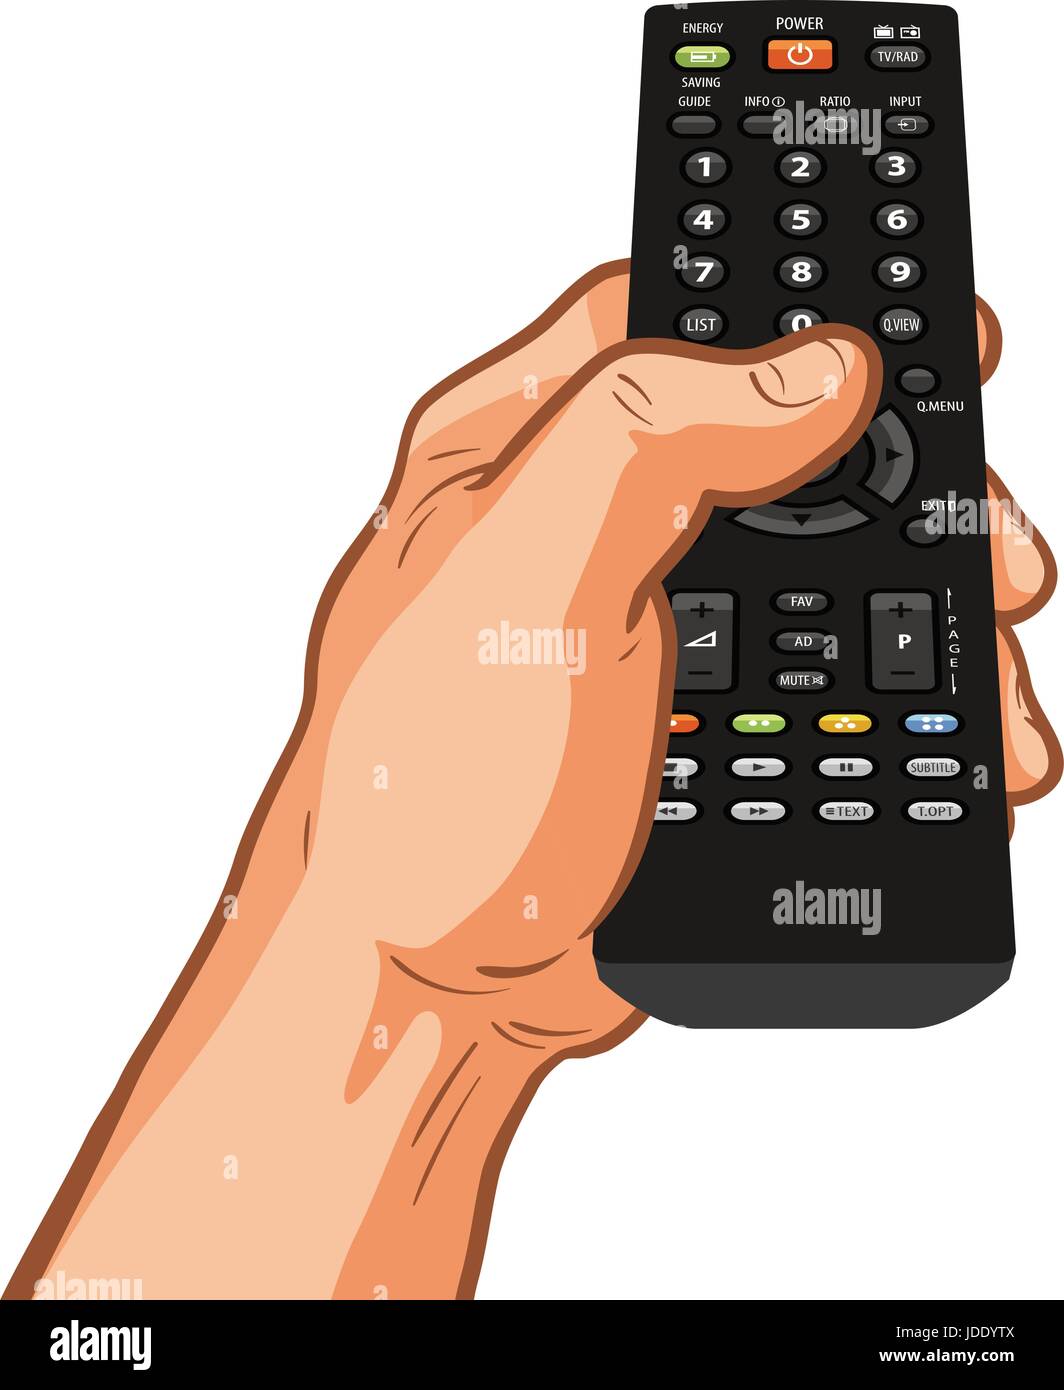 TV-Fernbedienung in der hand halten. Vektor-illustration Stock Vektor